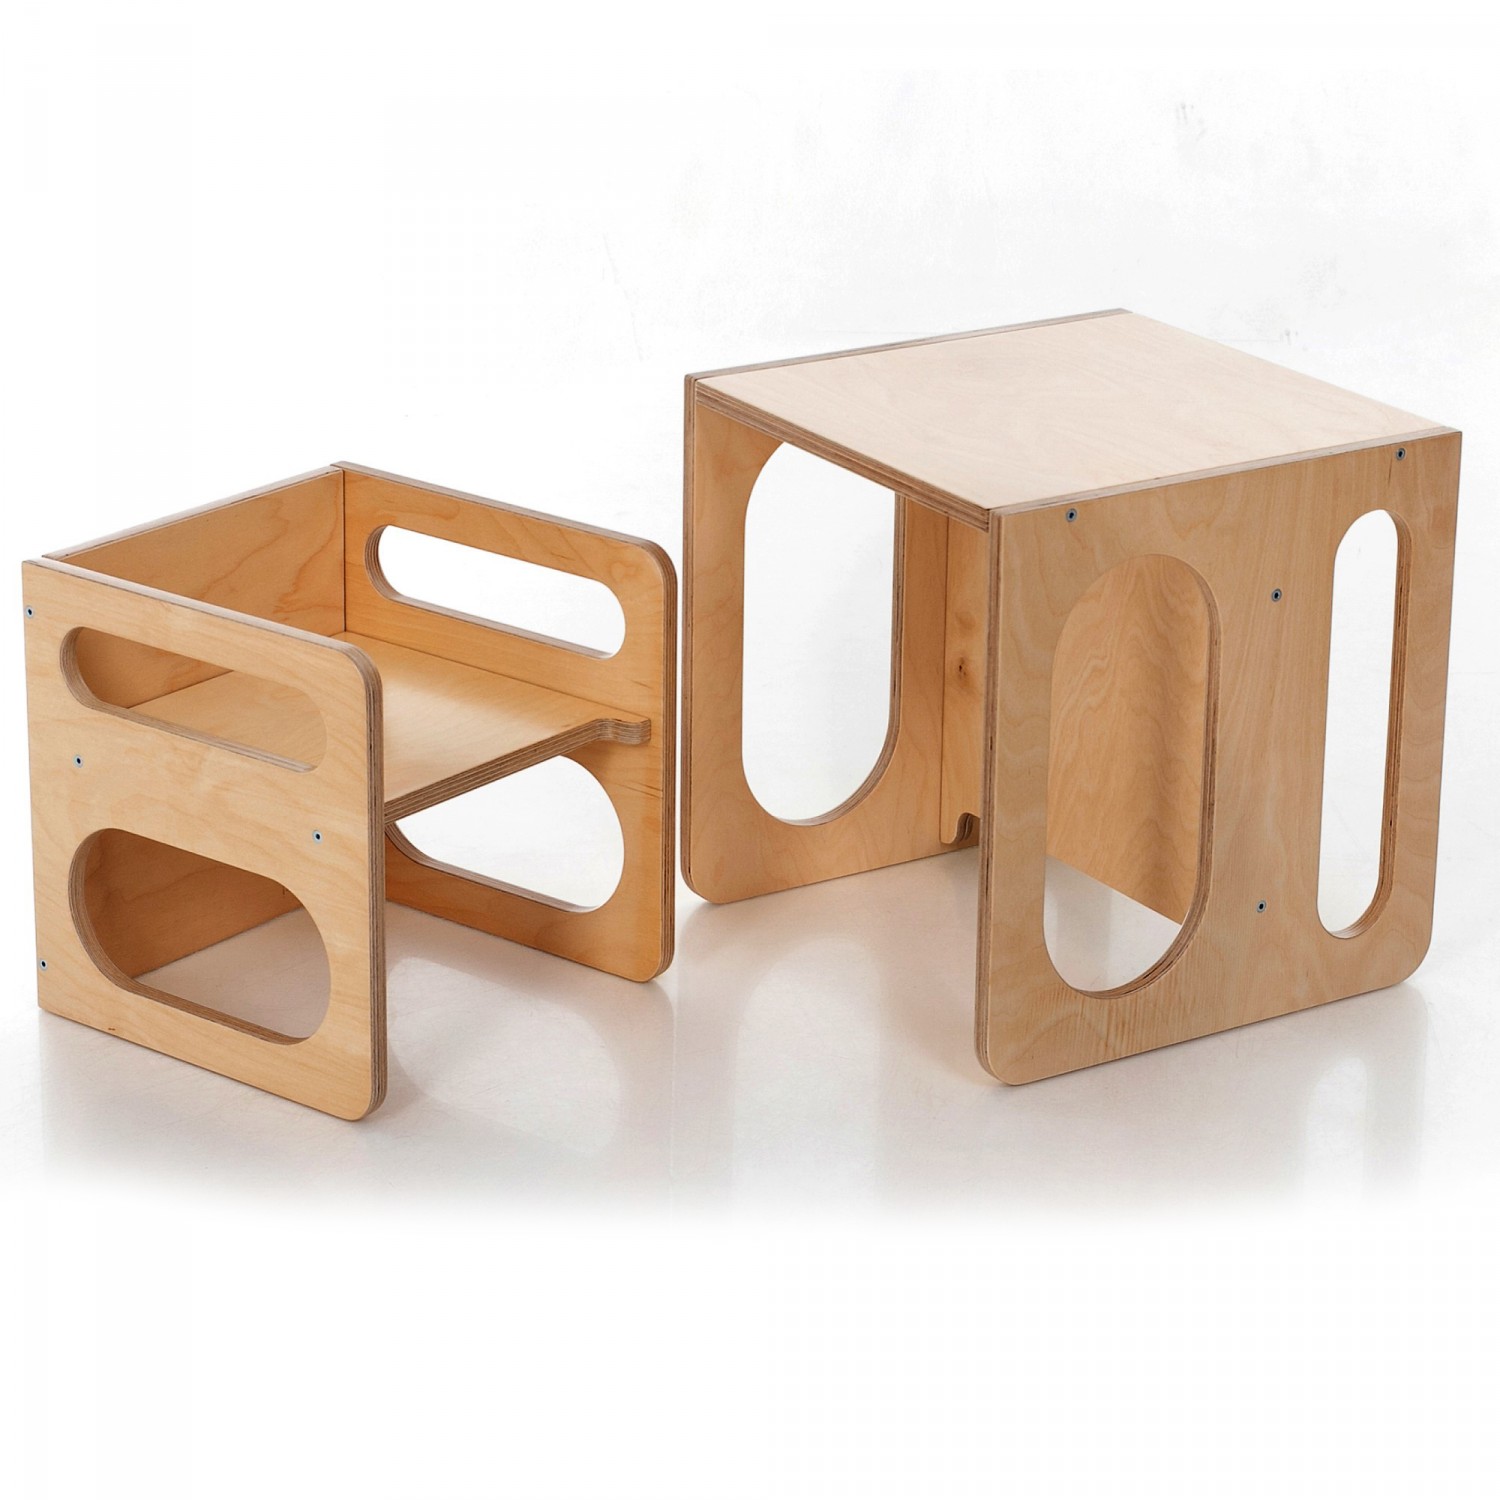 Montessori Cube Chair: Create an Adaptive Learning Space - WoodandHearts